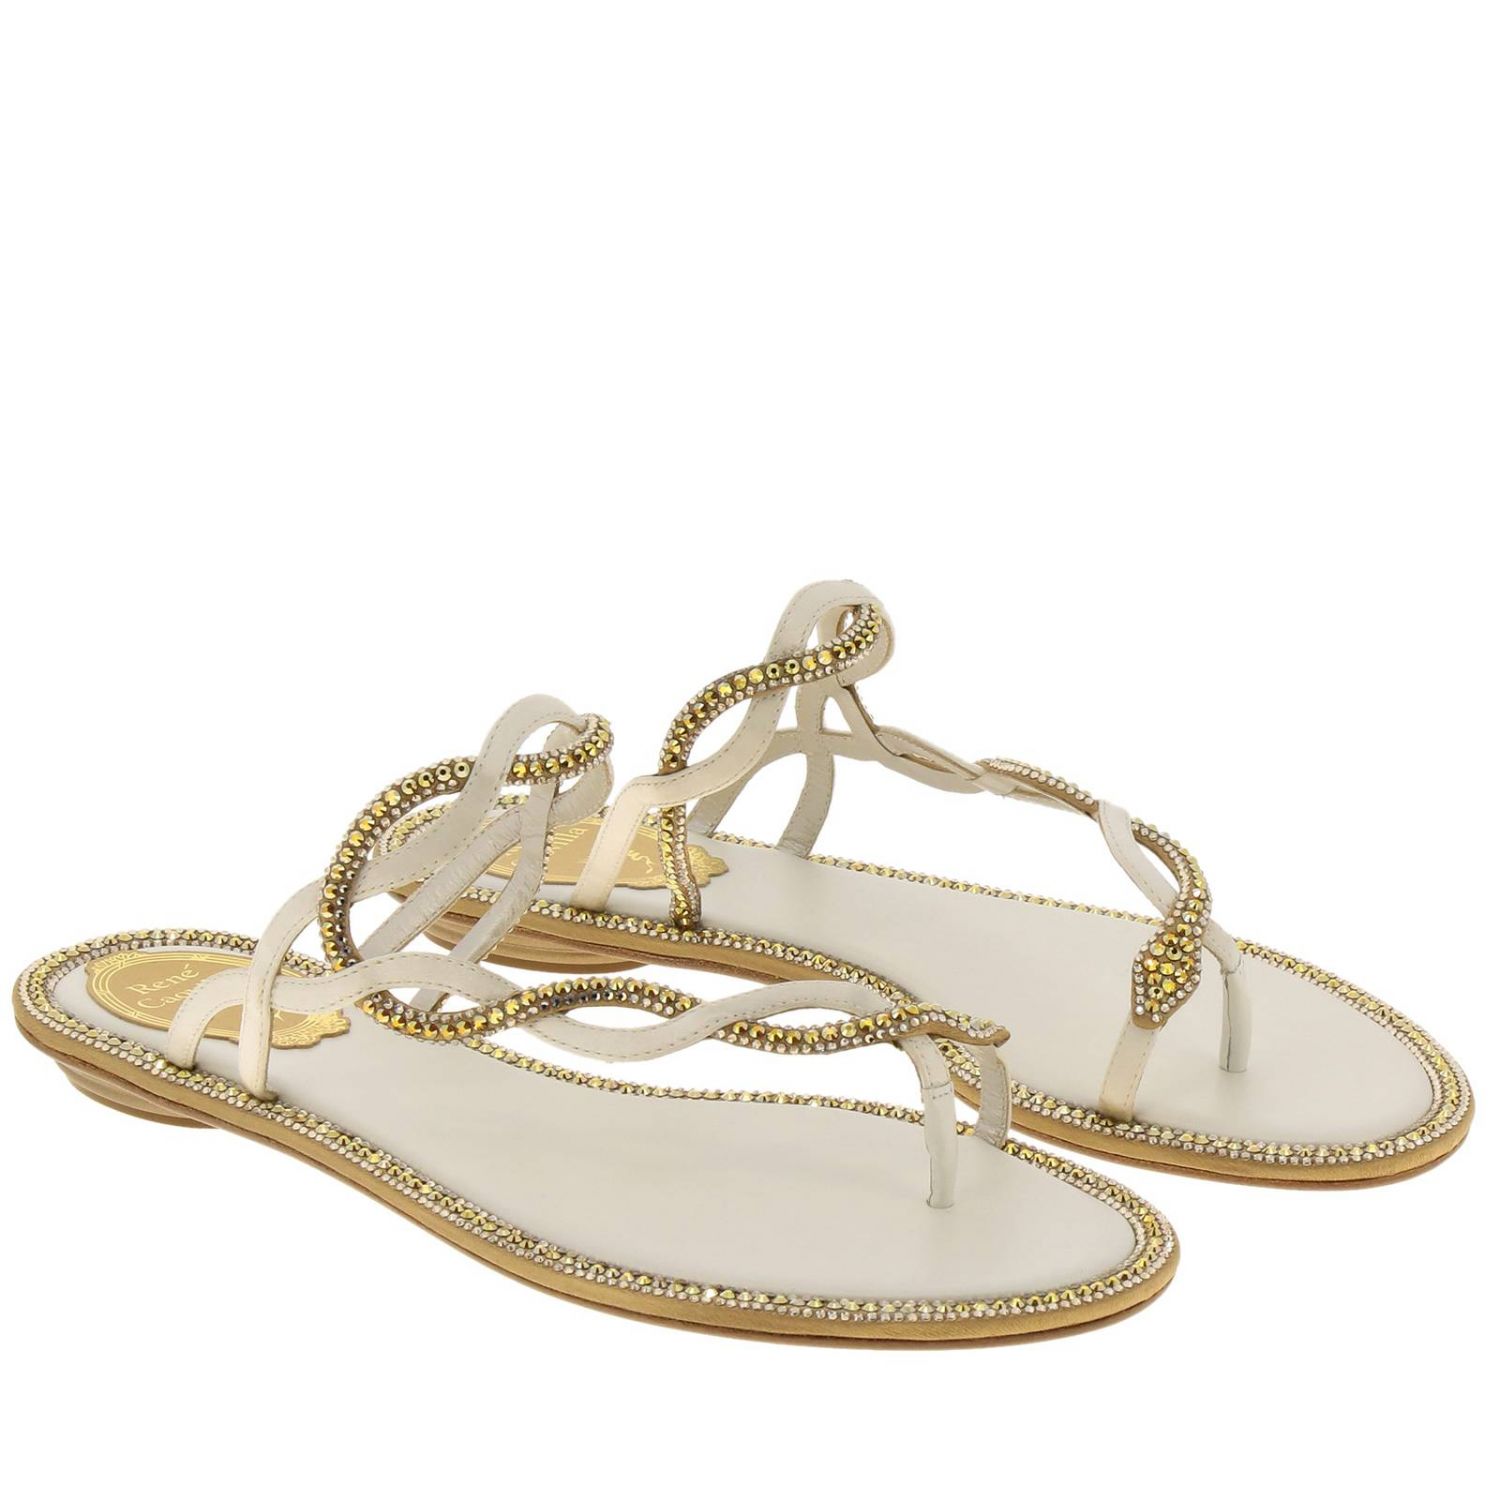 Sandales plates Rene Caovilla: Chaussures femme Rene Caovilla blanc 2